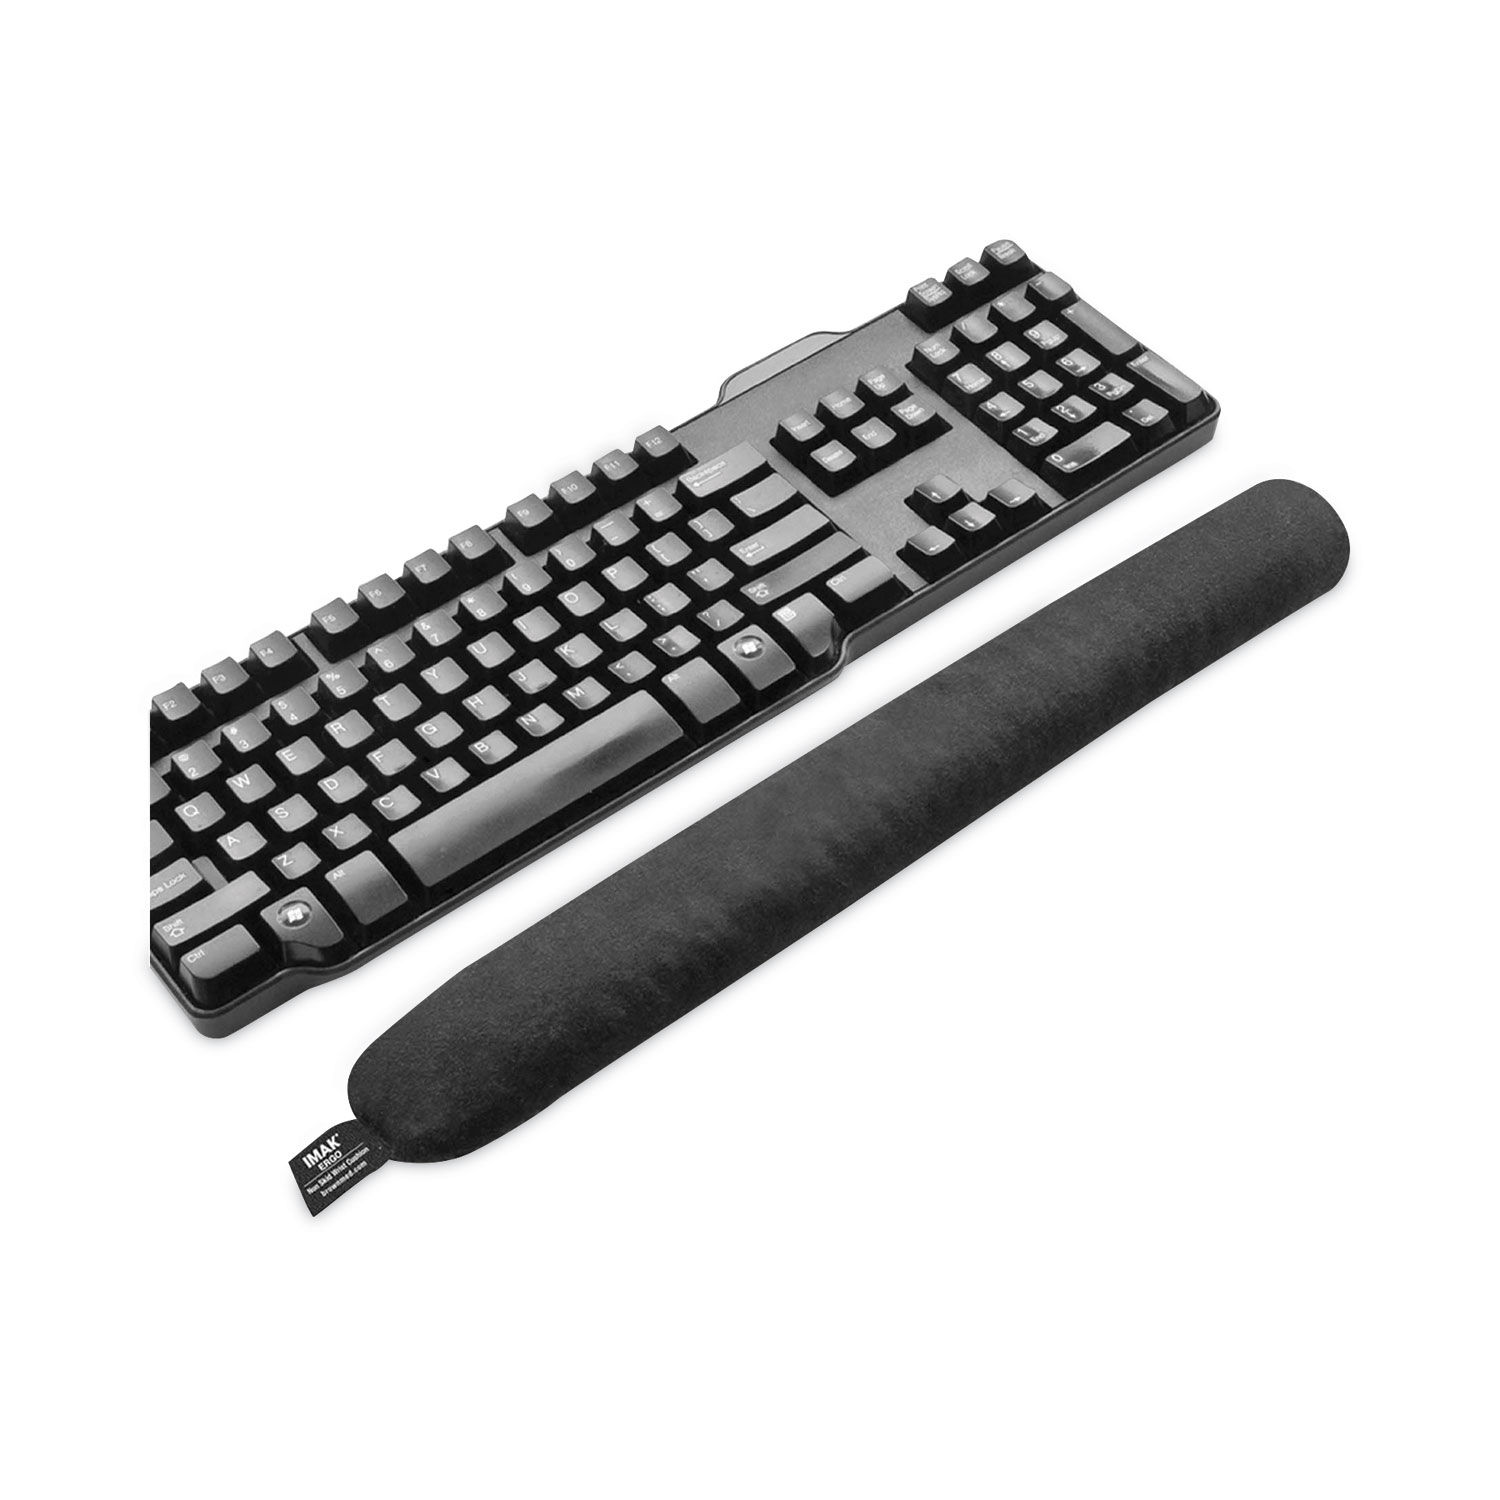 Keyboard Wrist Cushion 17.75 x 3, Black